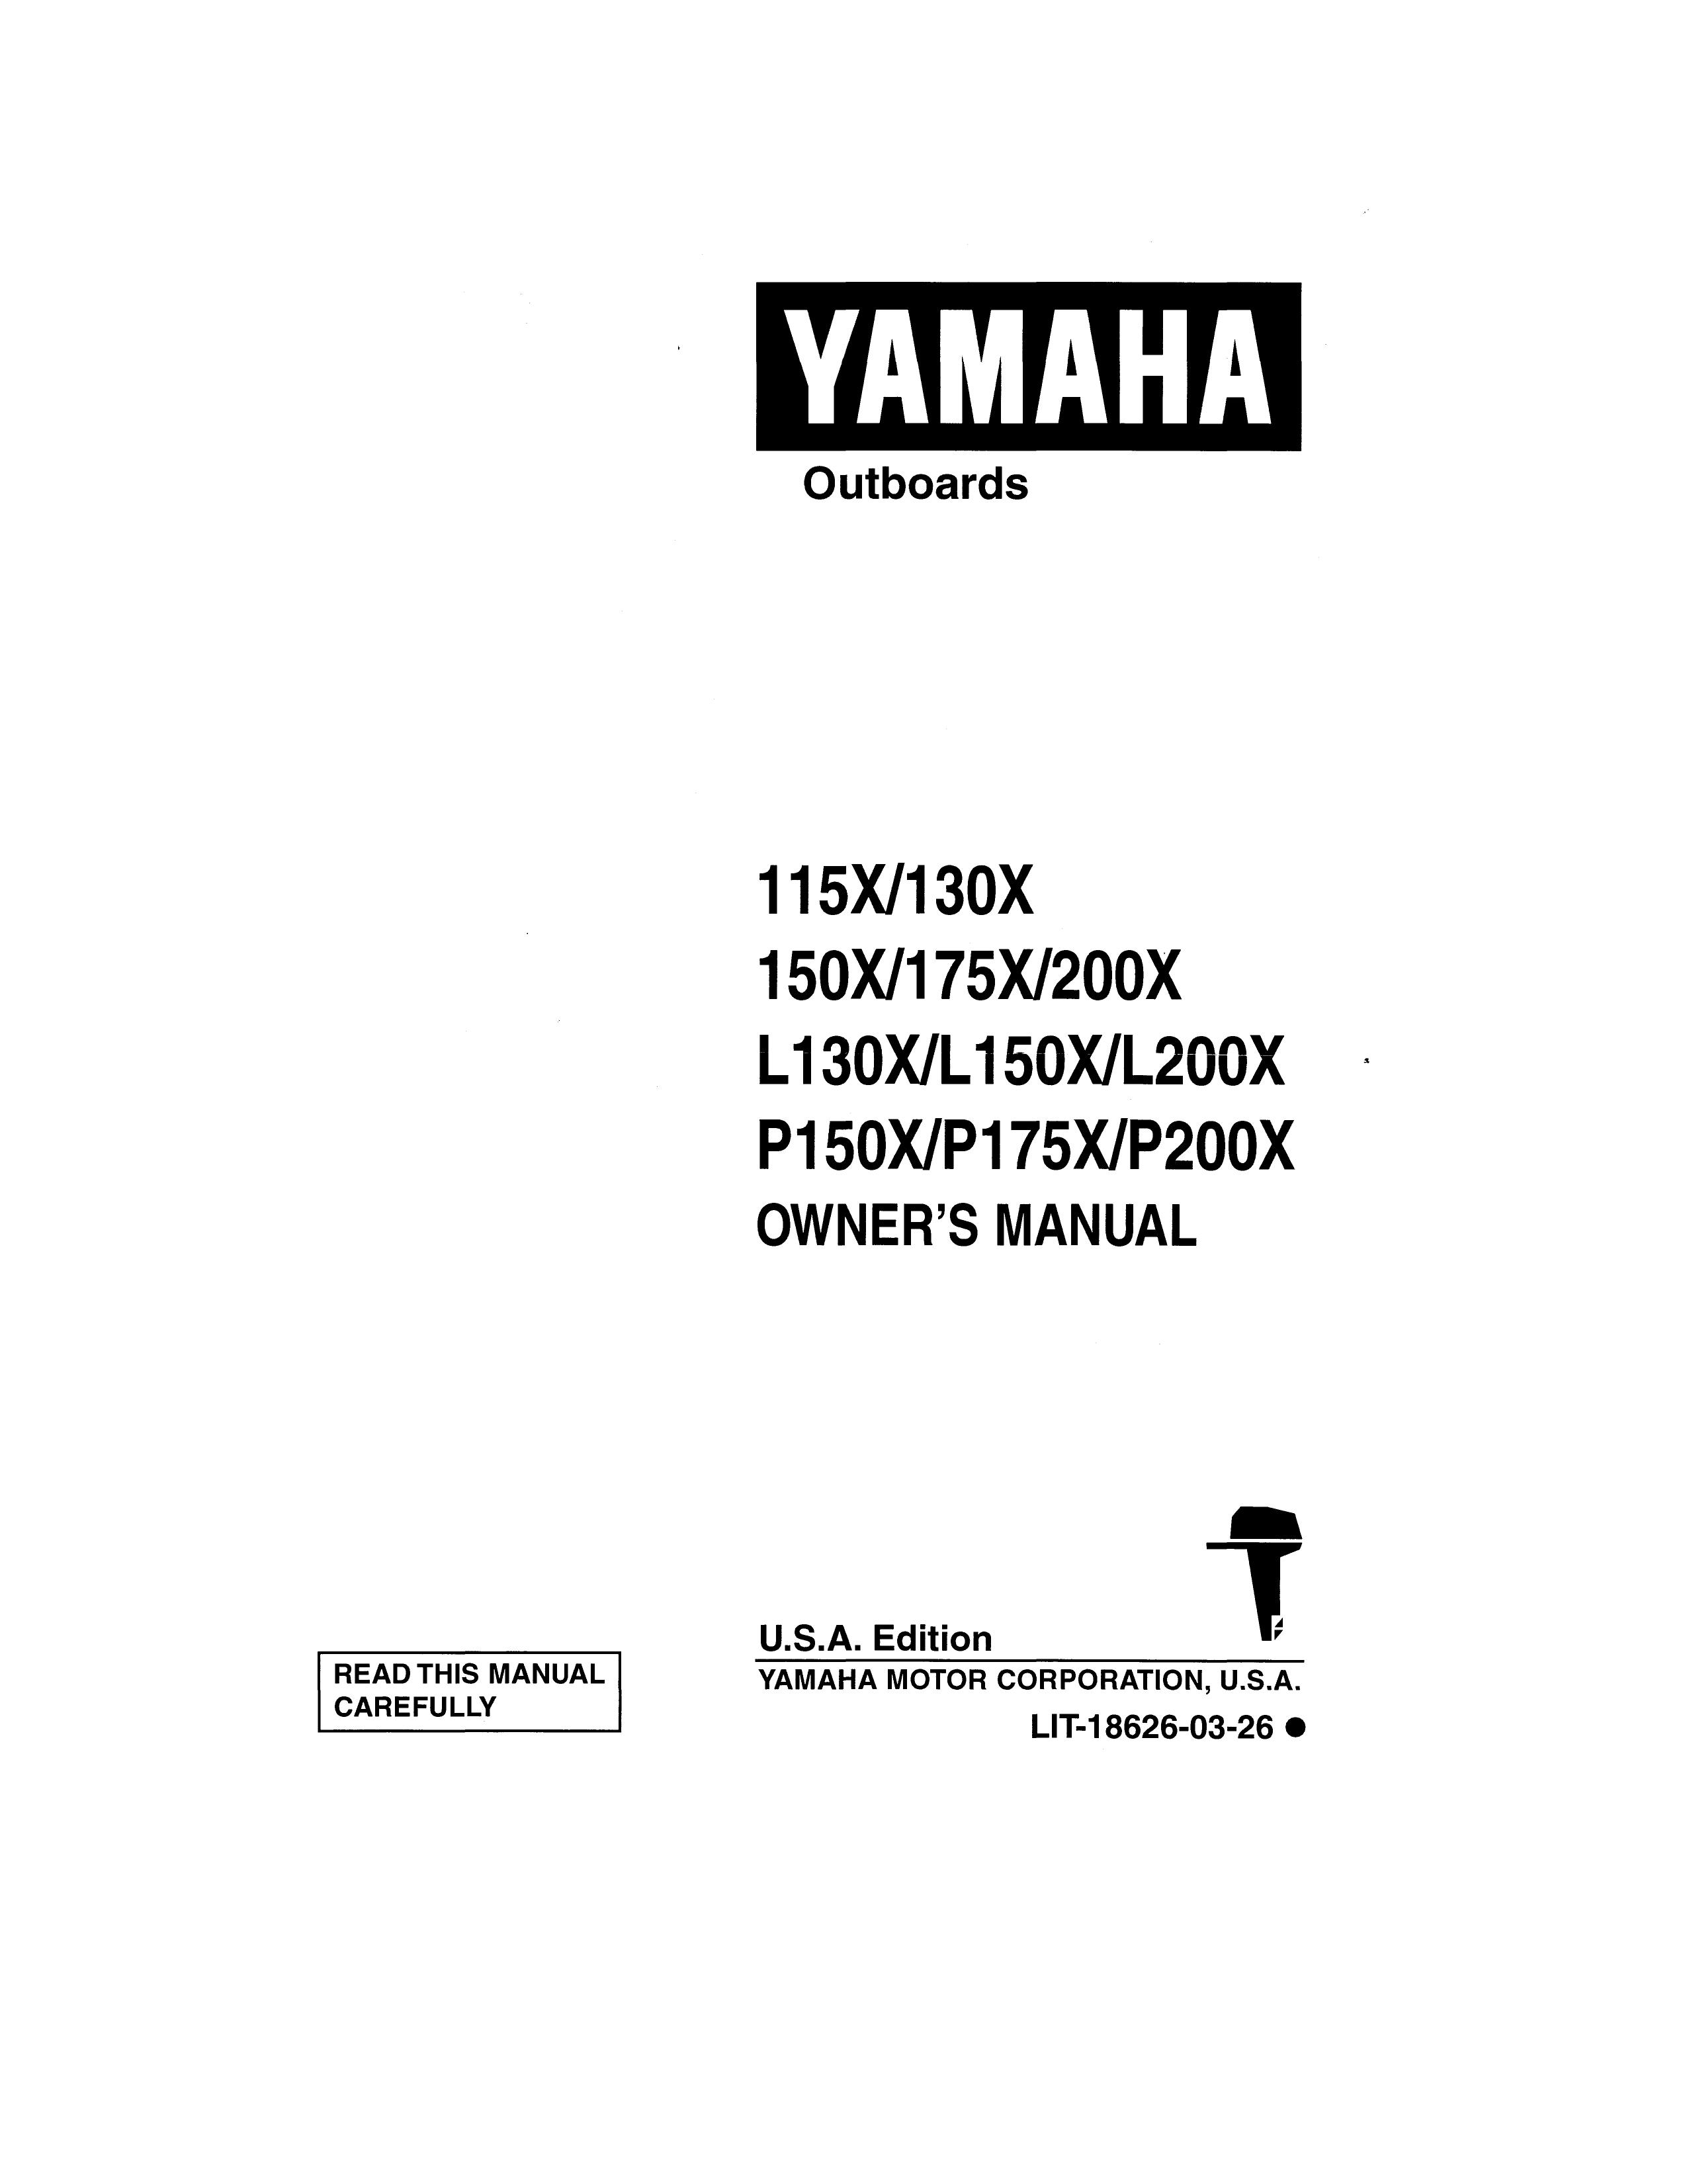 Yamaha 200X Outboard Motor User Manual